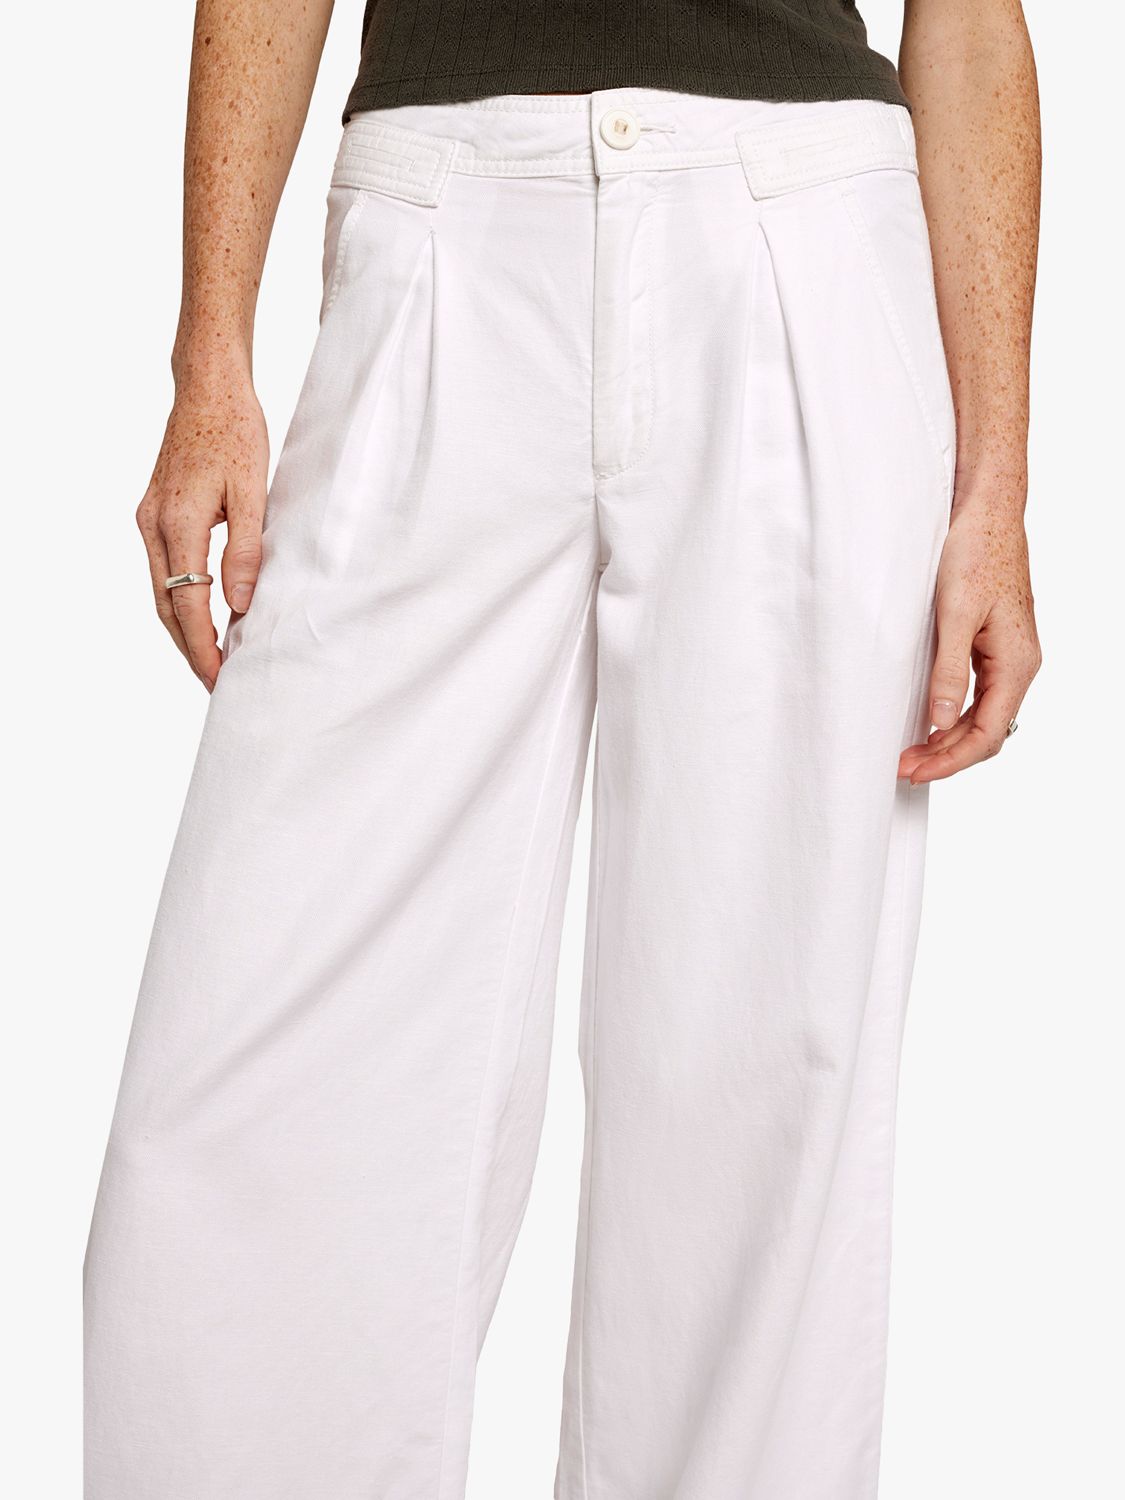 Current/Elliott The Markey Linen Blend Wide Leg Trousers, White, W25/L33